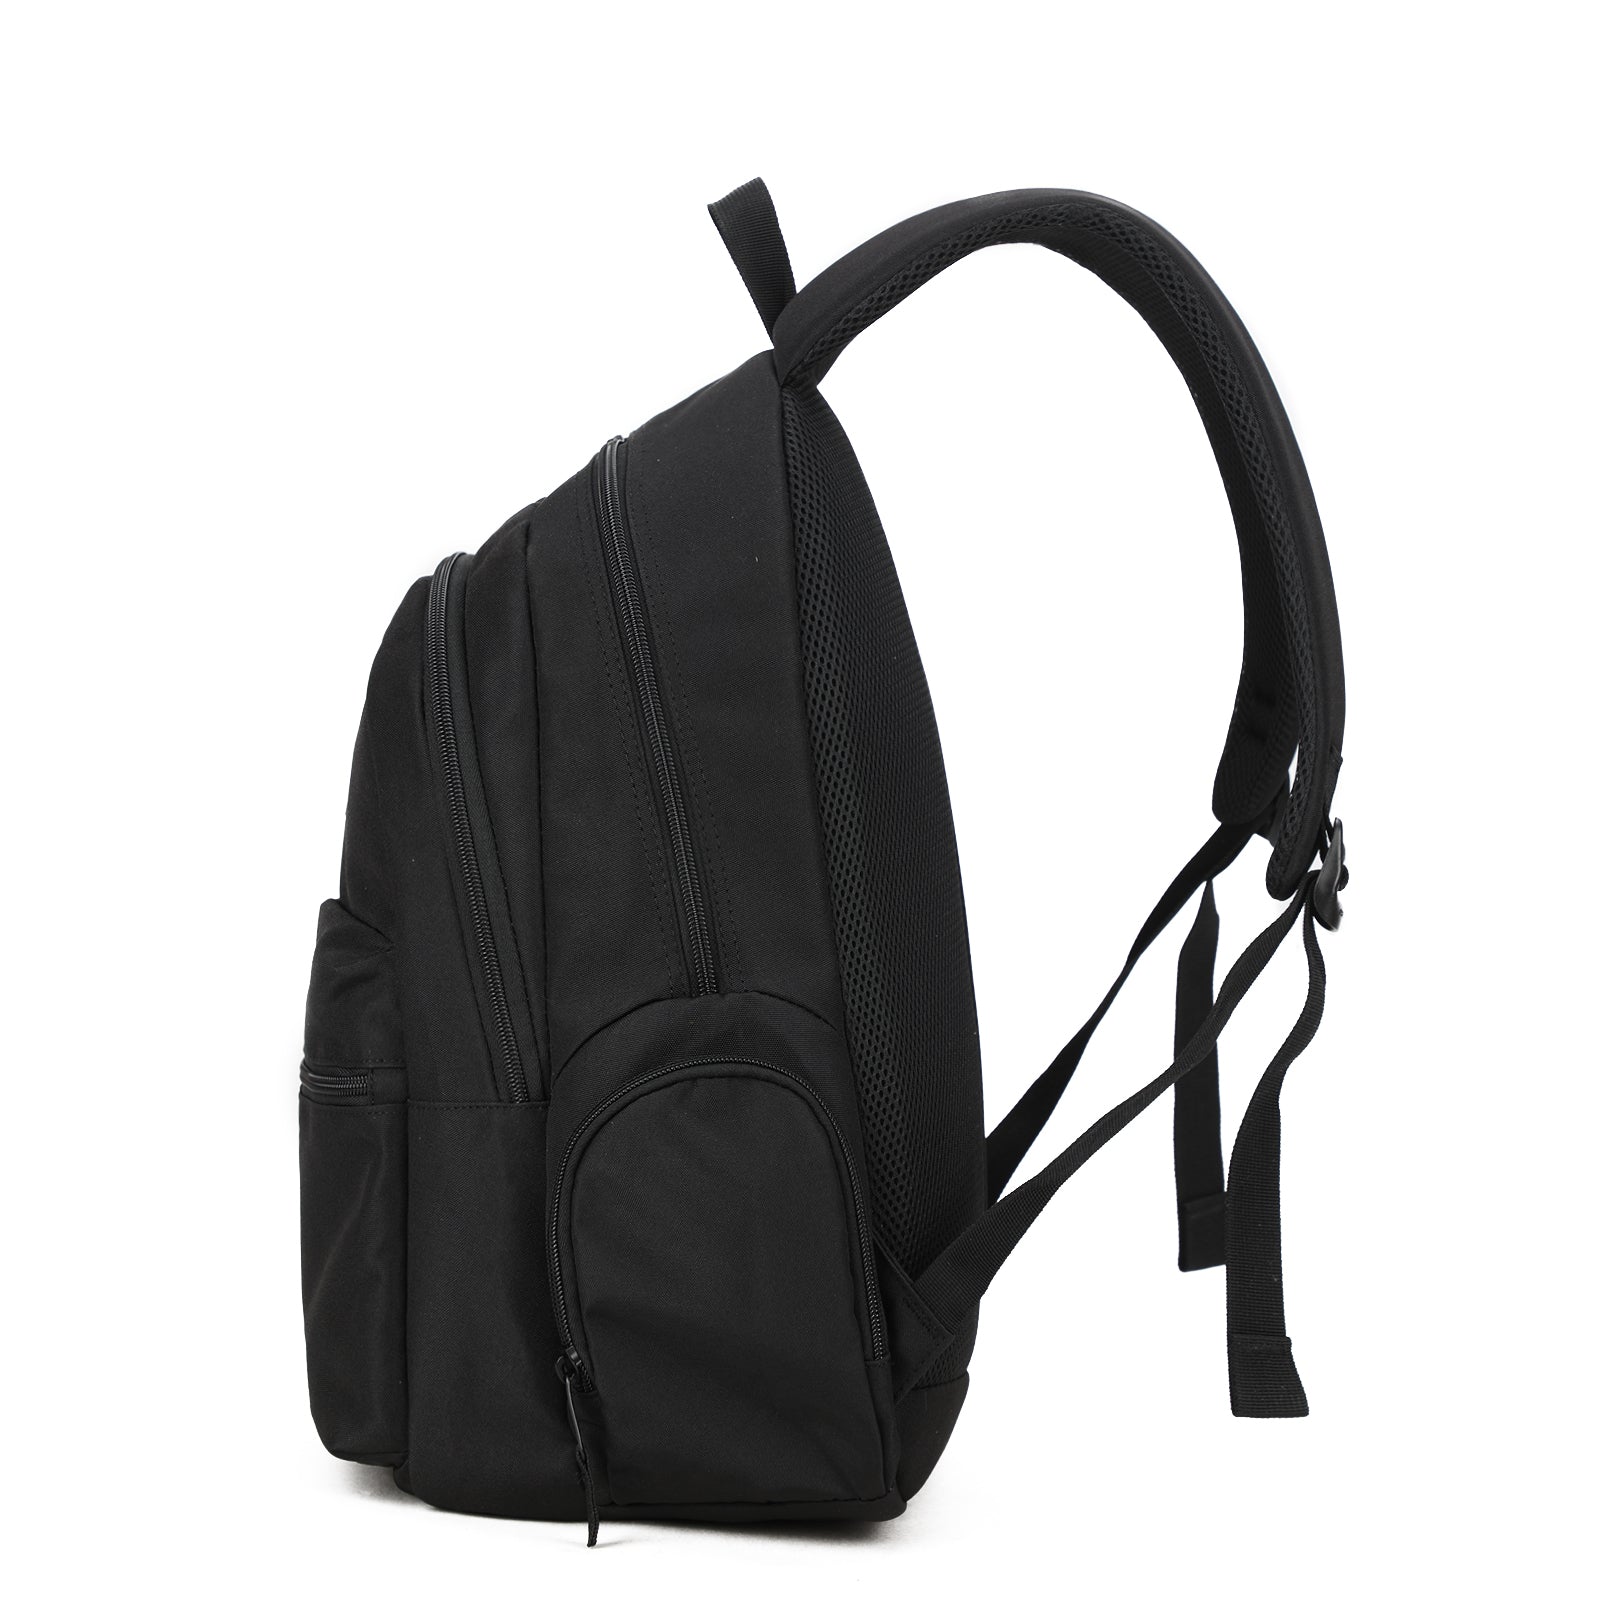 Aoking Travel Backpack XN2619 Black